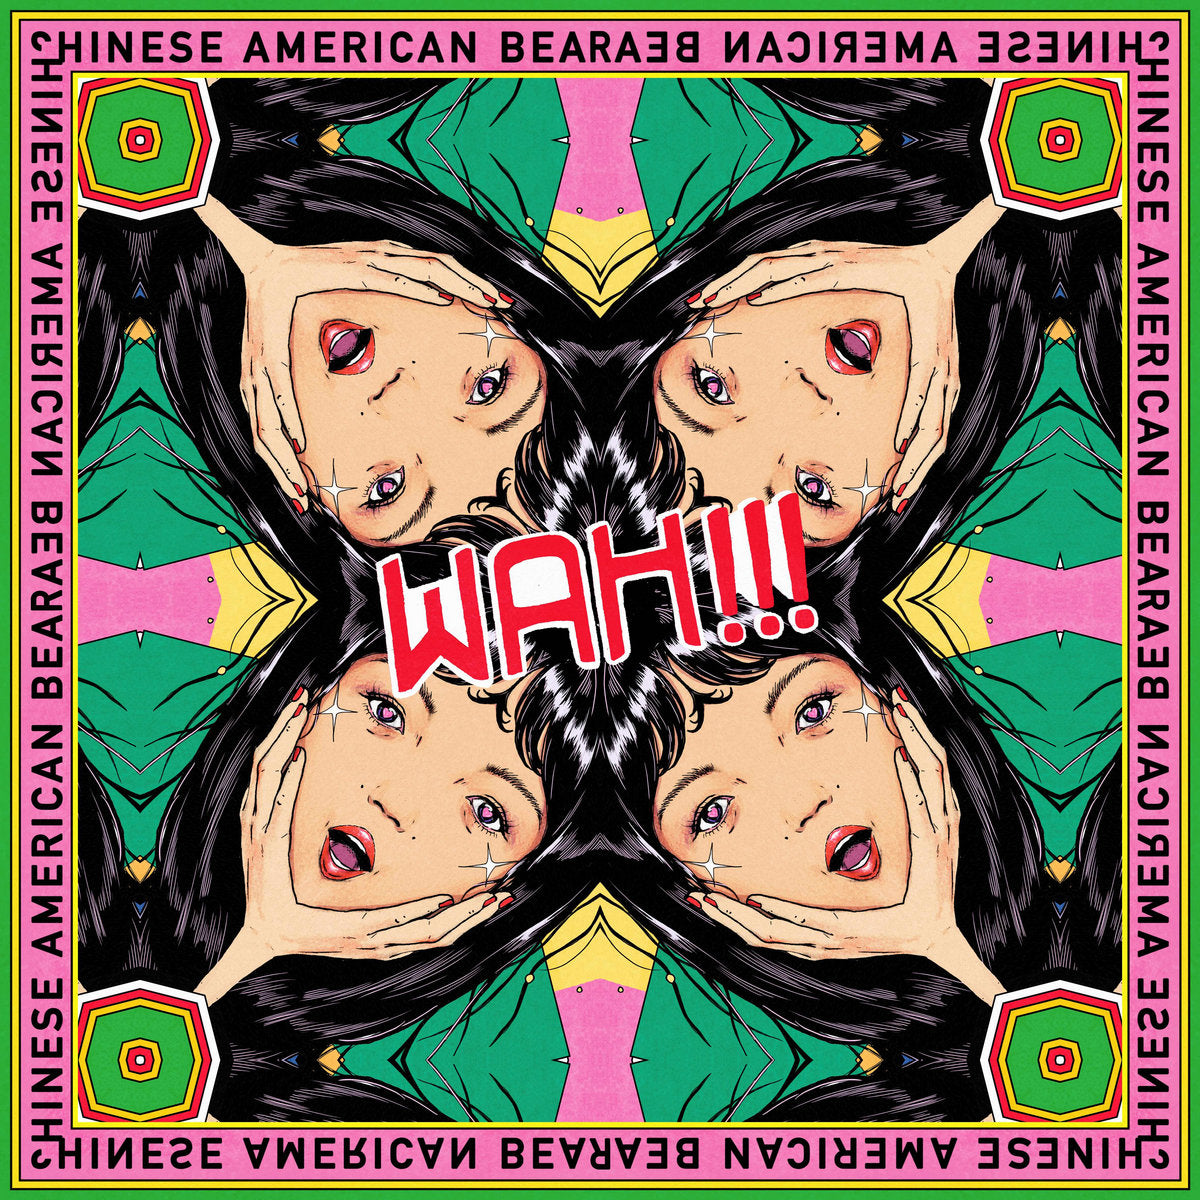 CHINESE AMERICAN BEAR - WAH!!! - LP - Strawberry Pink Vinyl [OCT 18]